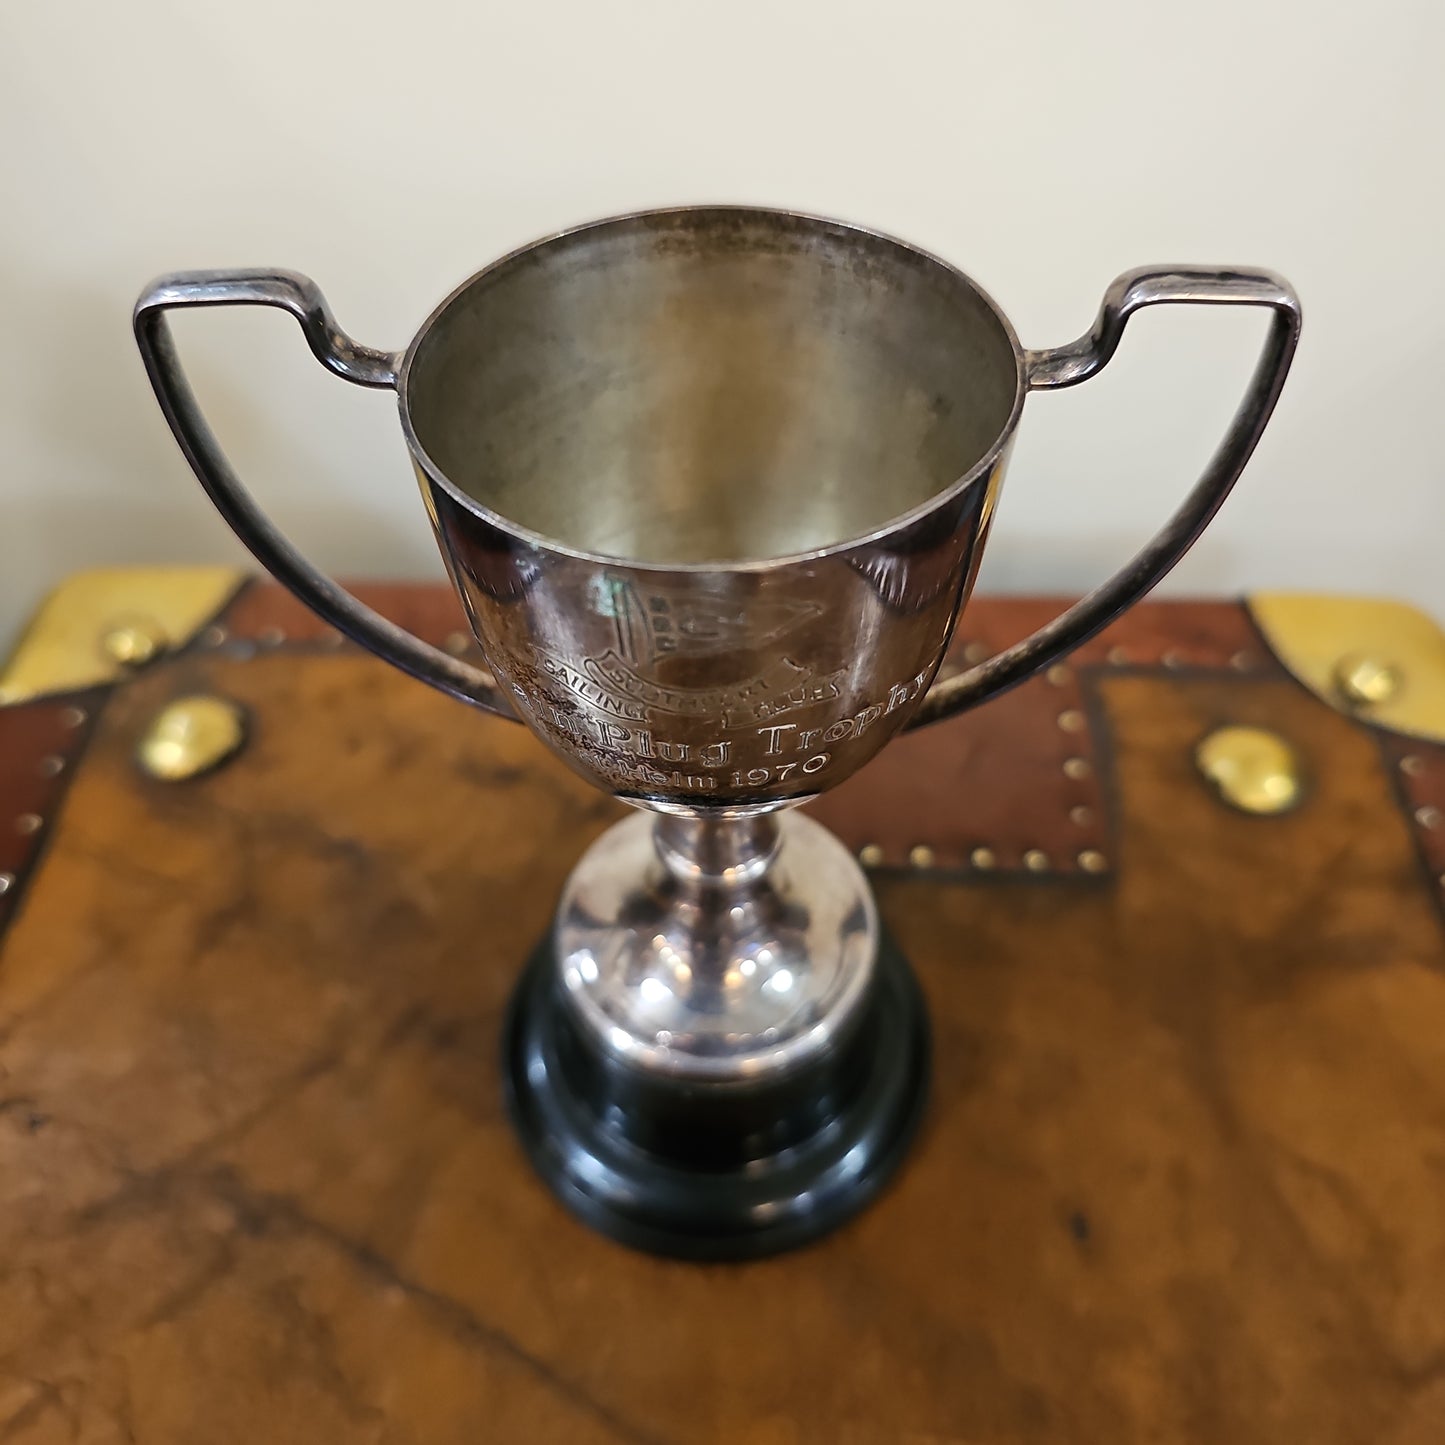 Vintage Trophy, "Southport Sailing Club, Drain Plug Trophy, 1970"